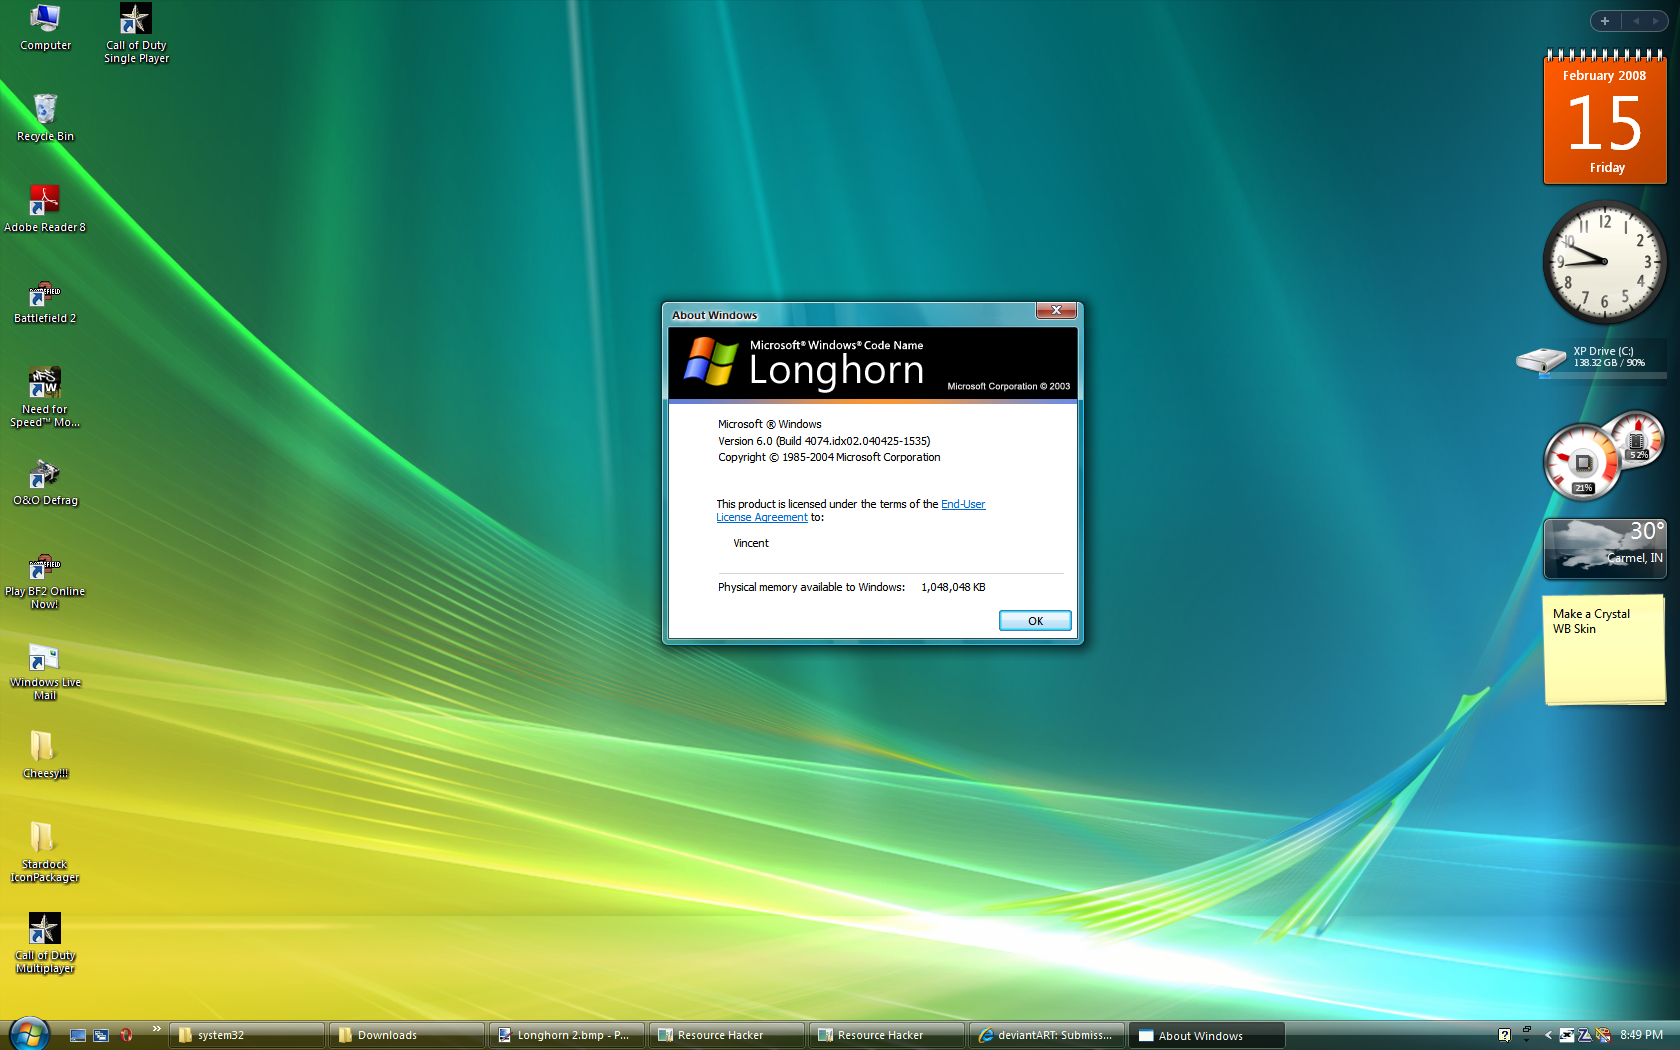 Longhorn Beta build 3663